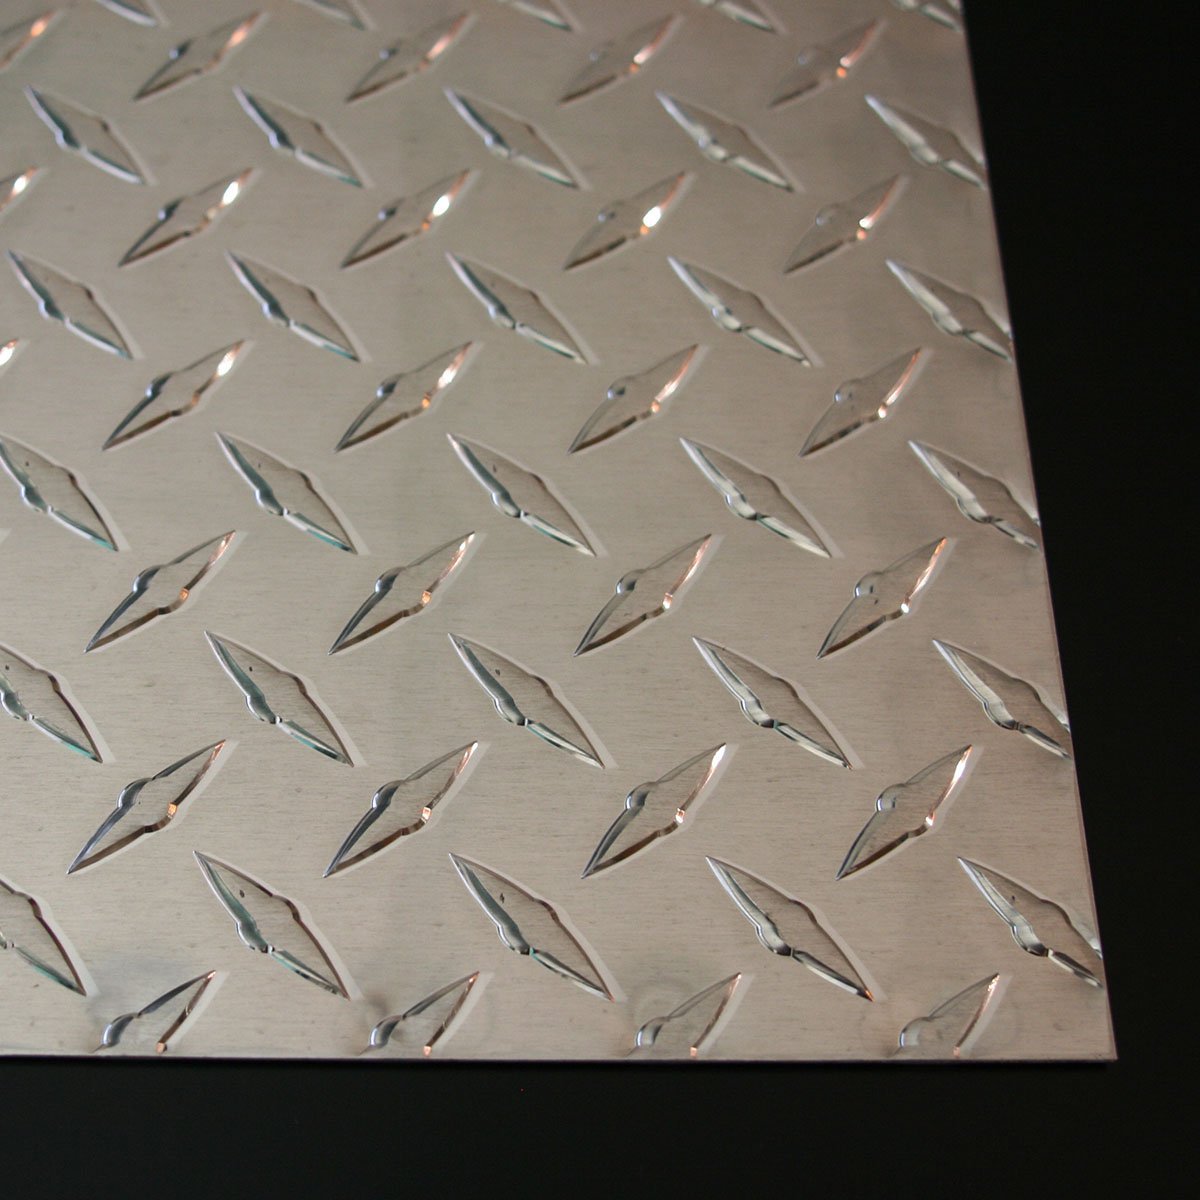 3003-H22  48 X 24-7/16 X .125 Aluminum Diamond Tread Plate  Aluminum Treadplate is commonly known as Diamondplate 20171005